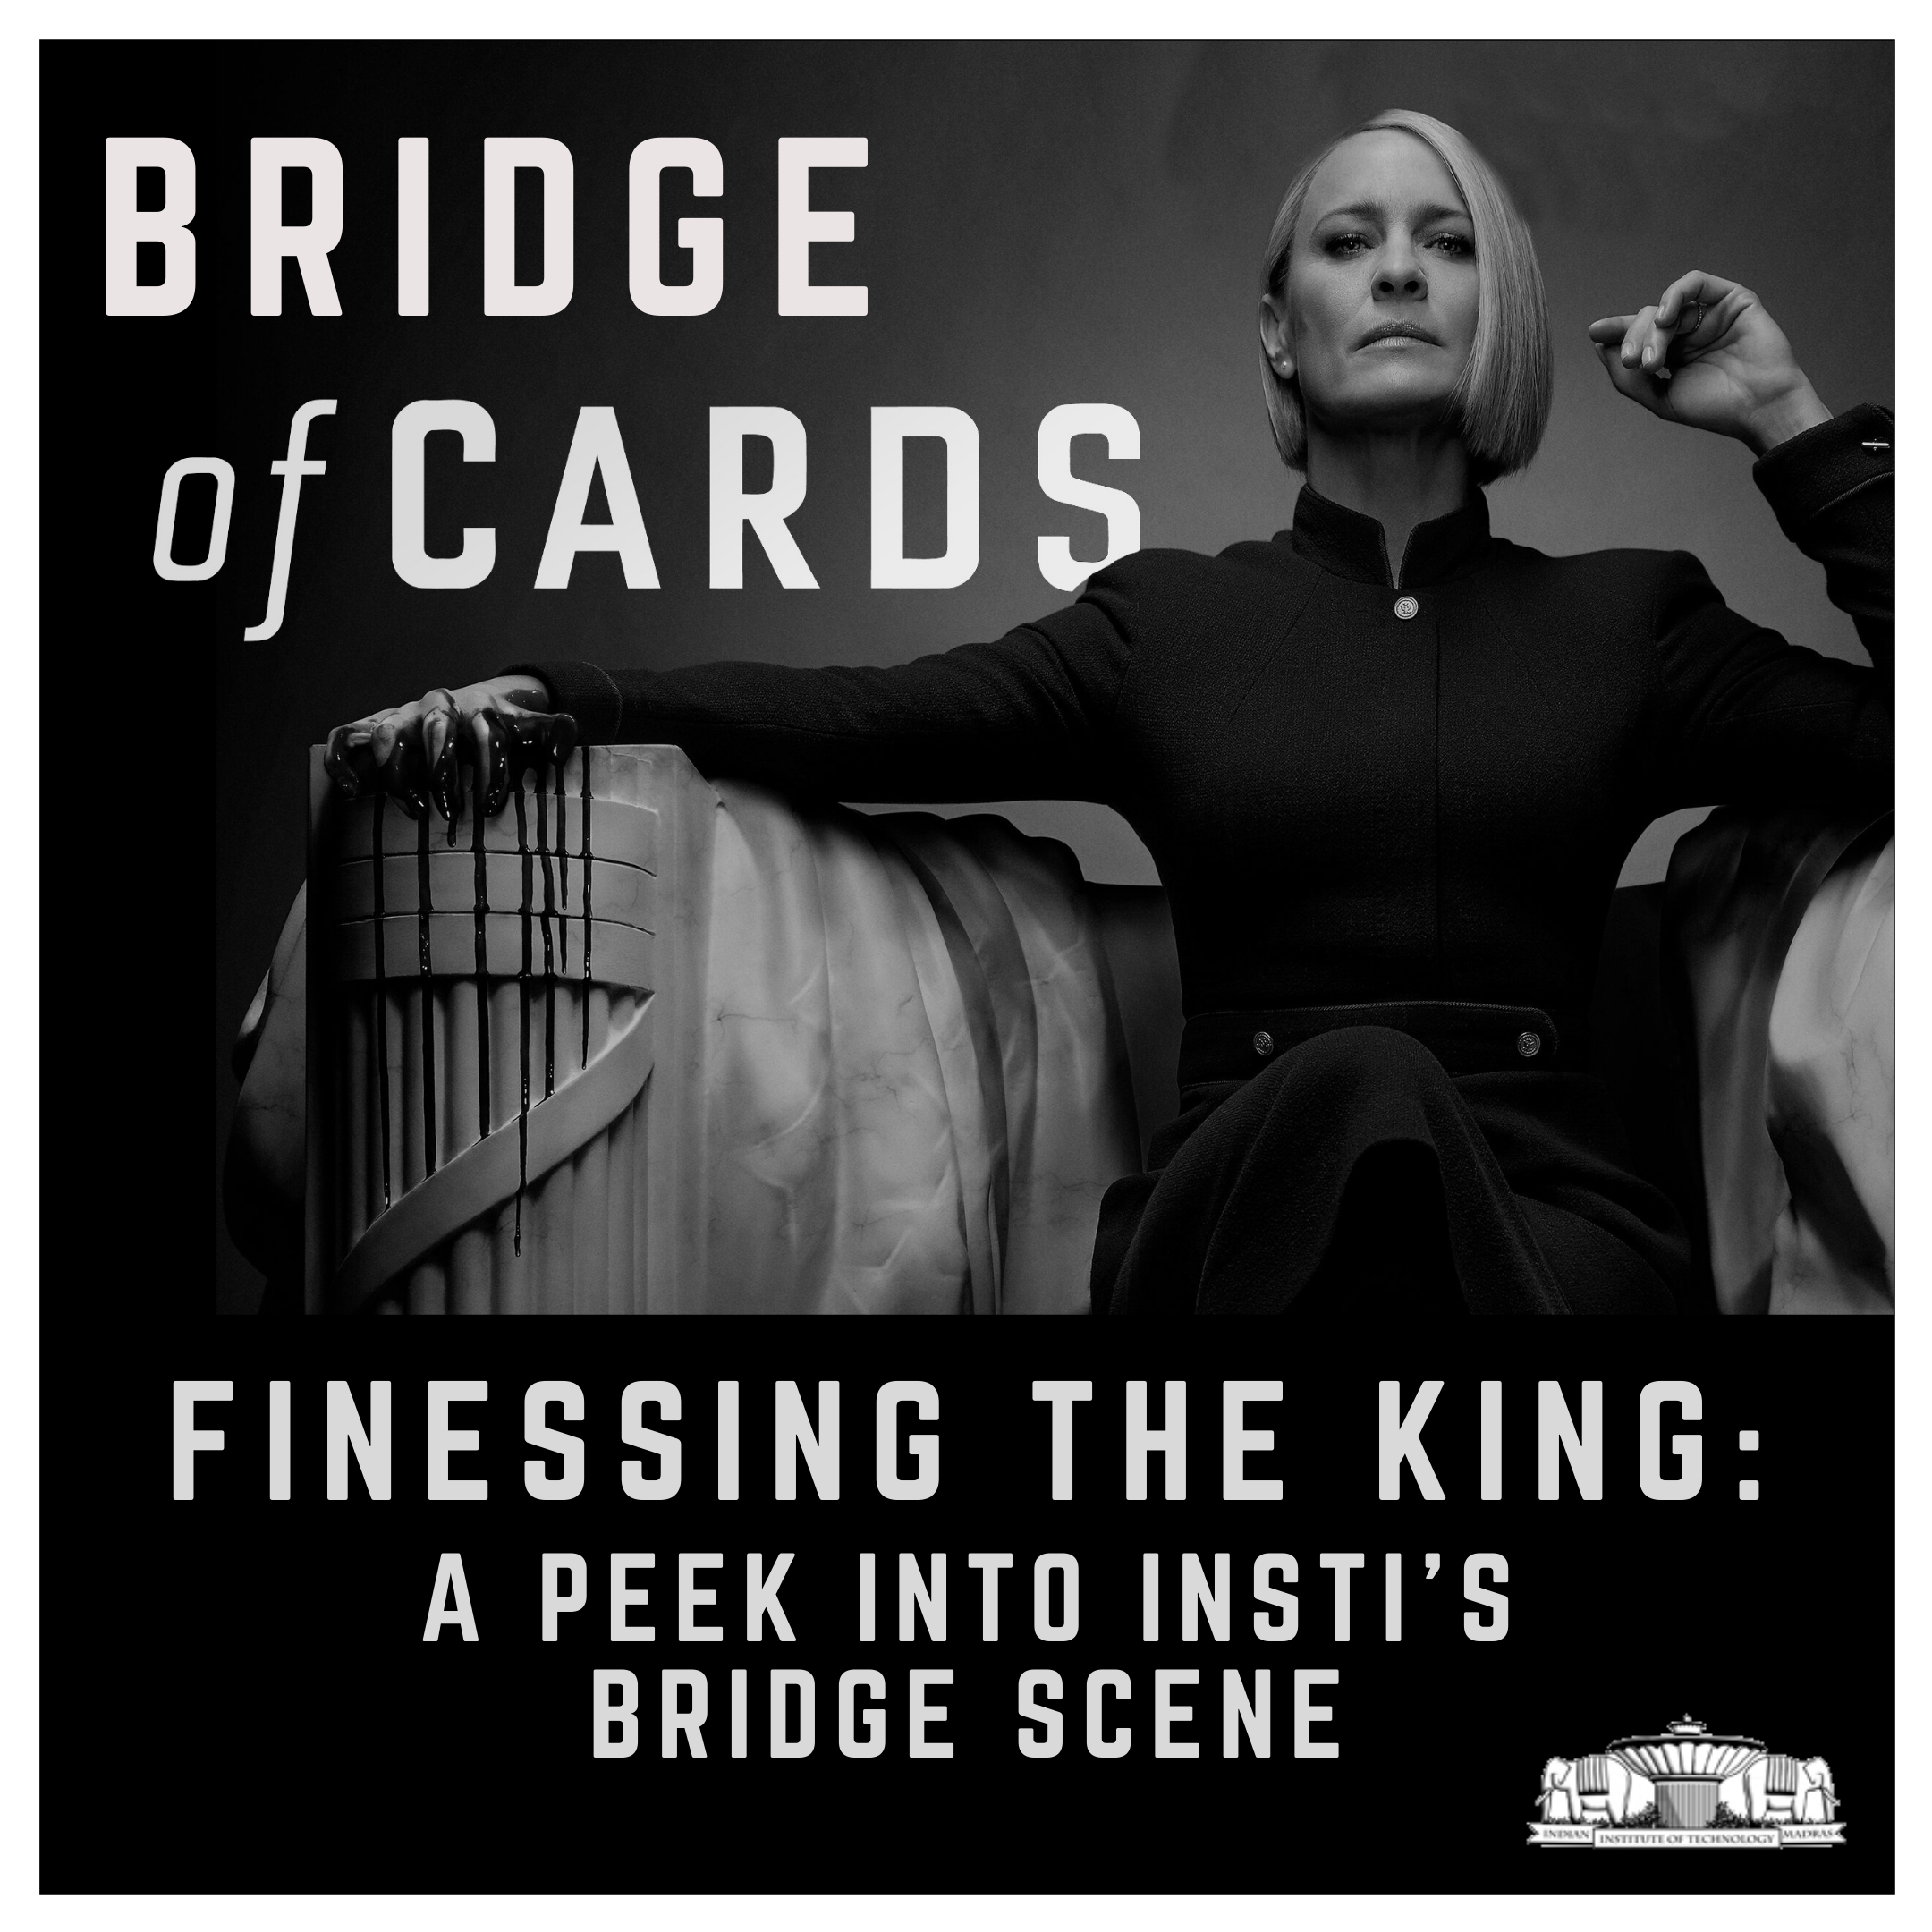 Finessing the King: A peek into Insti’s Bridge scene